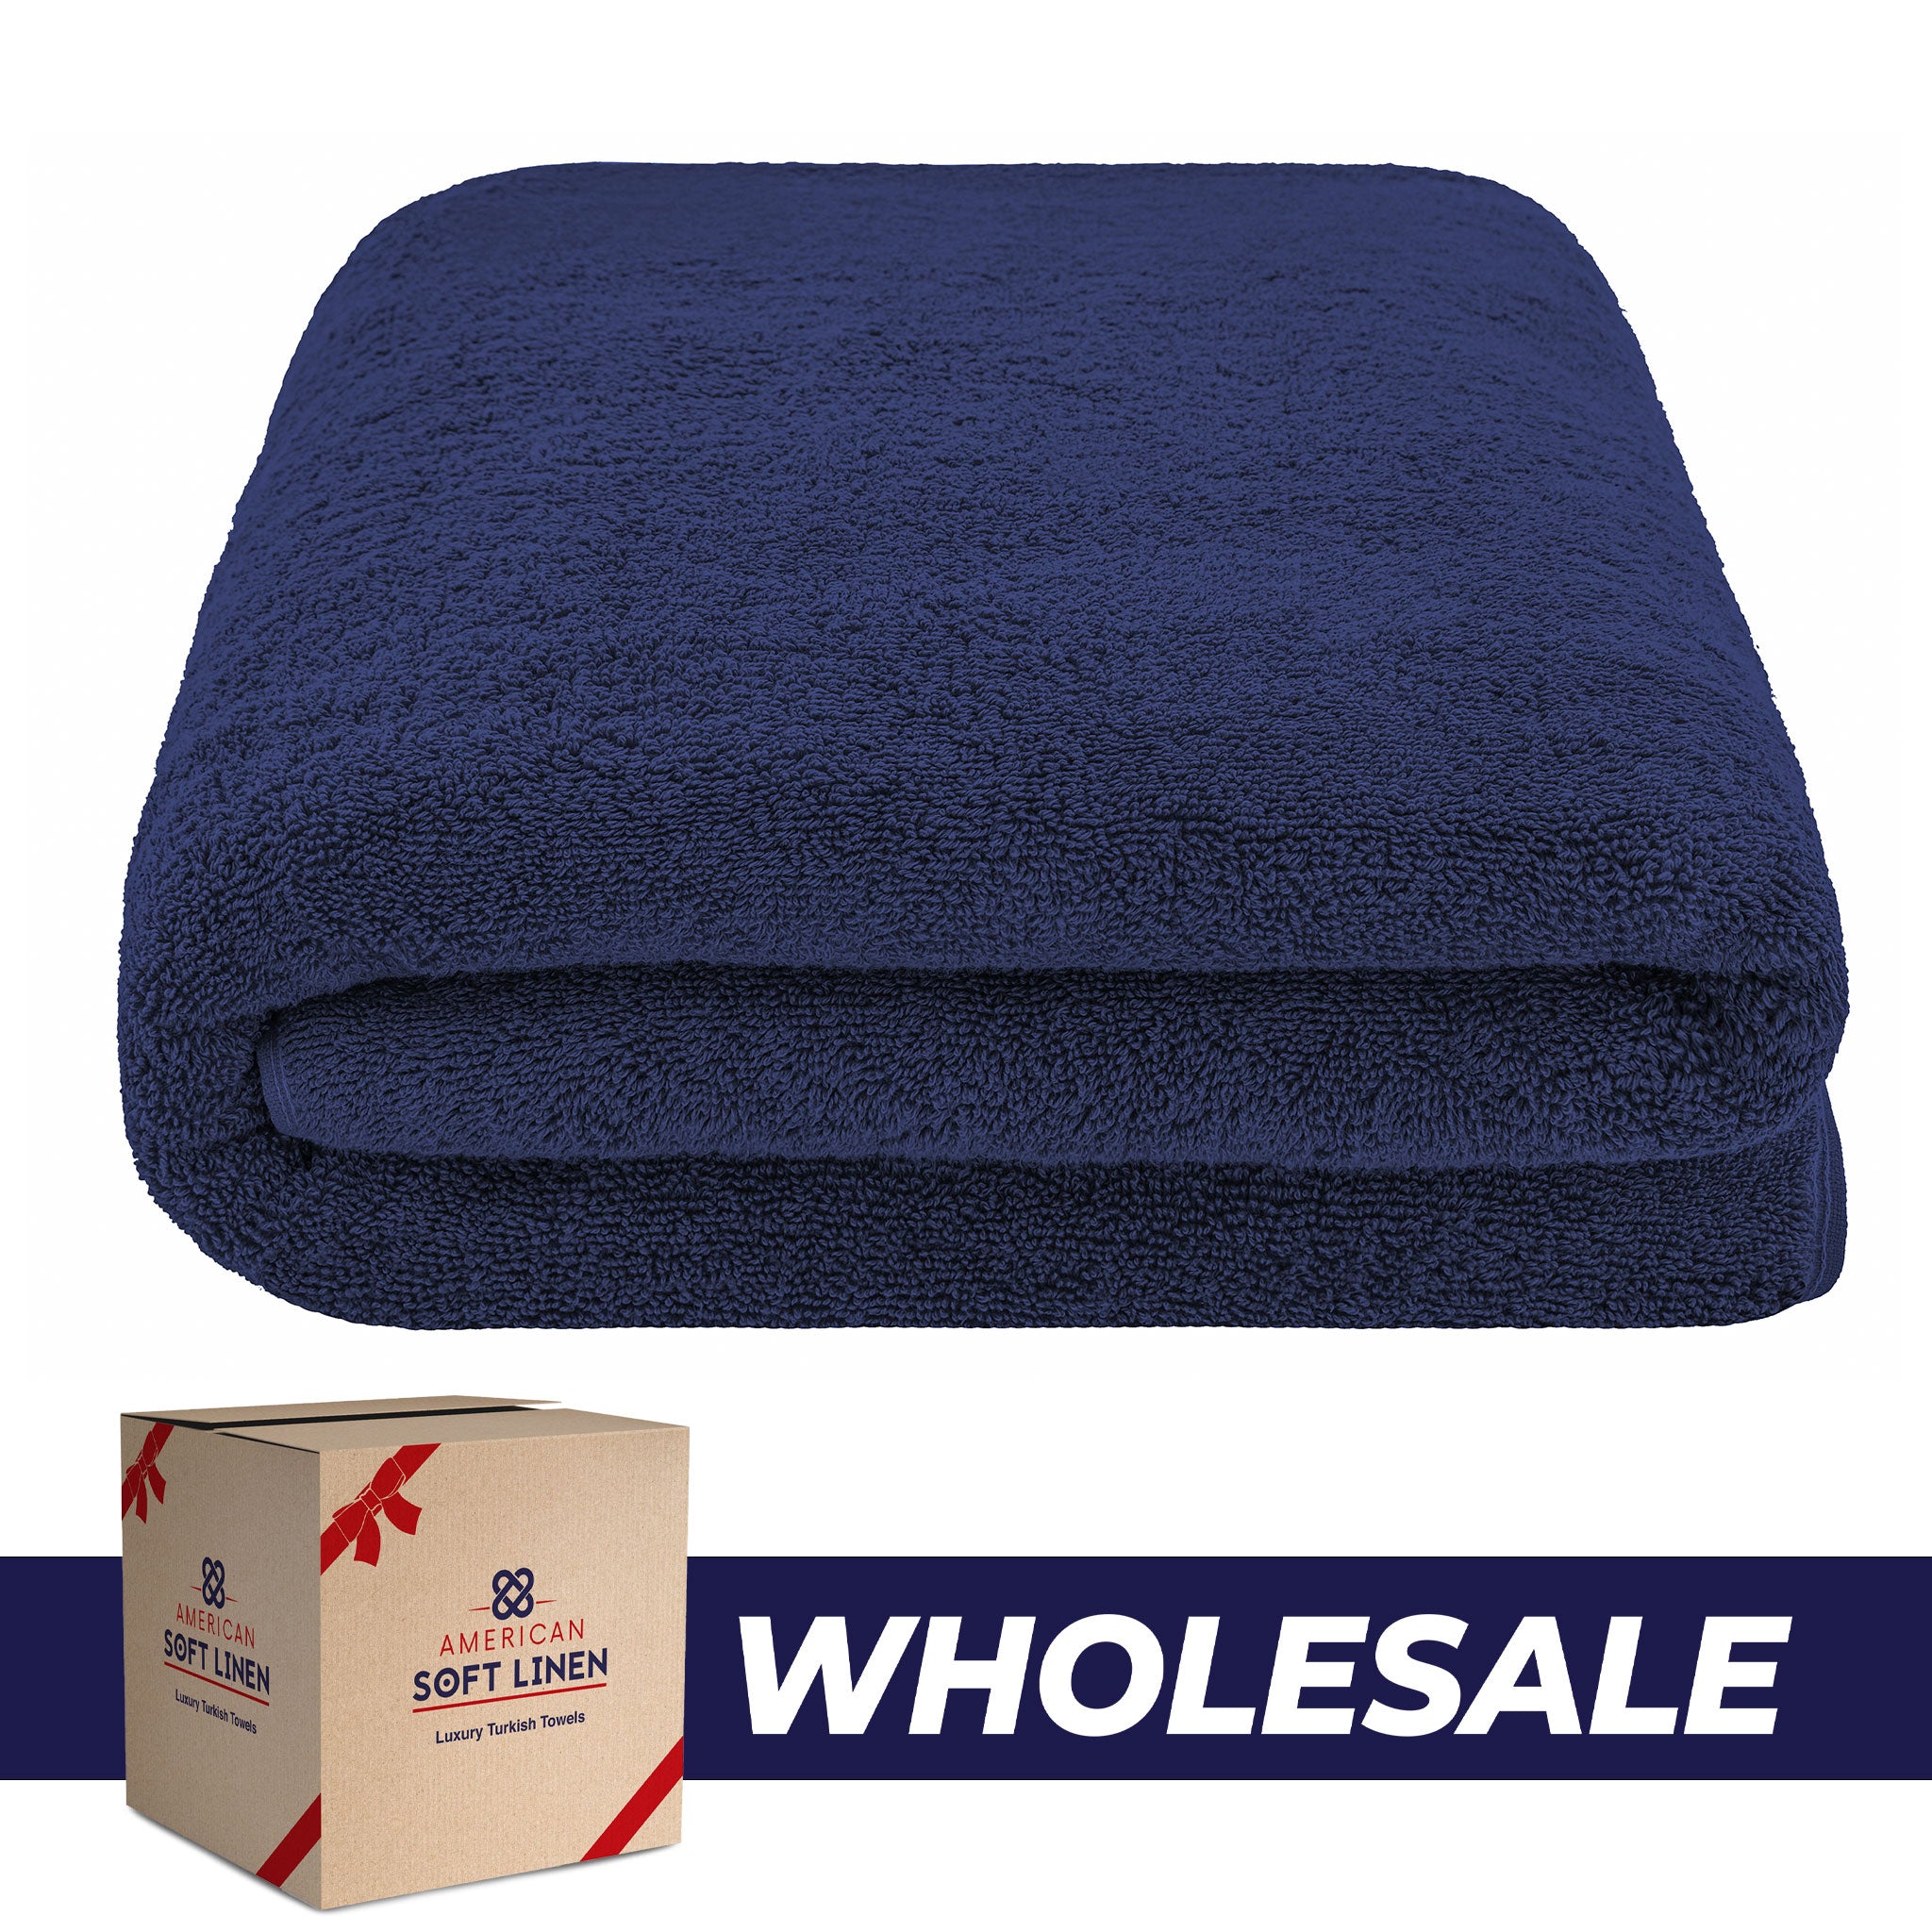 American Soft Linen Bath Sheet 40x80 Inch 100% Cotton Extra Large